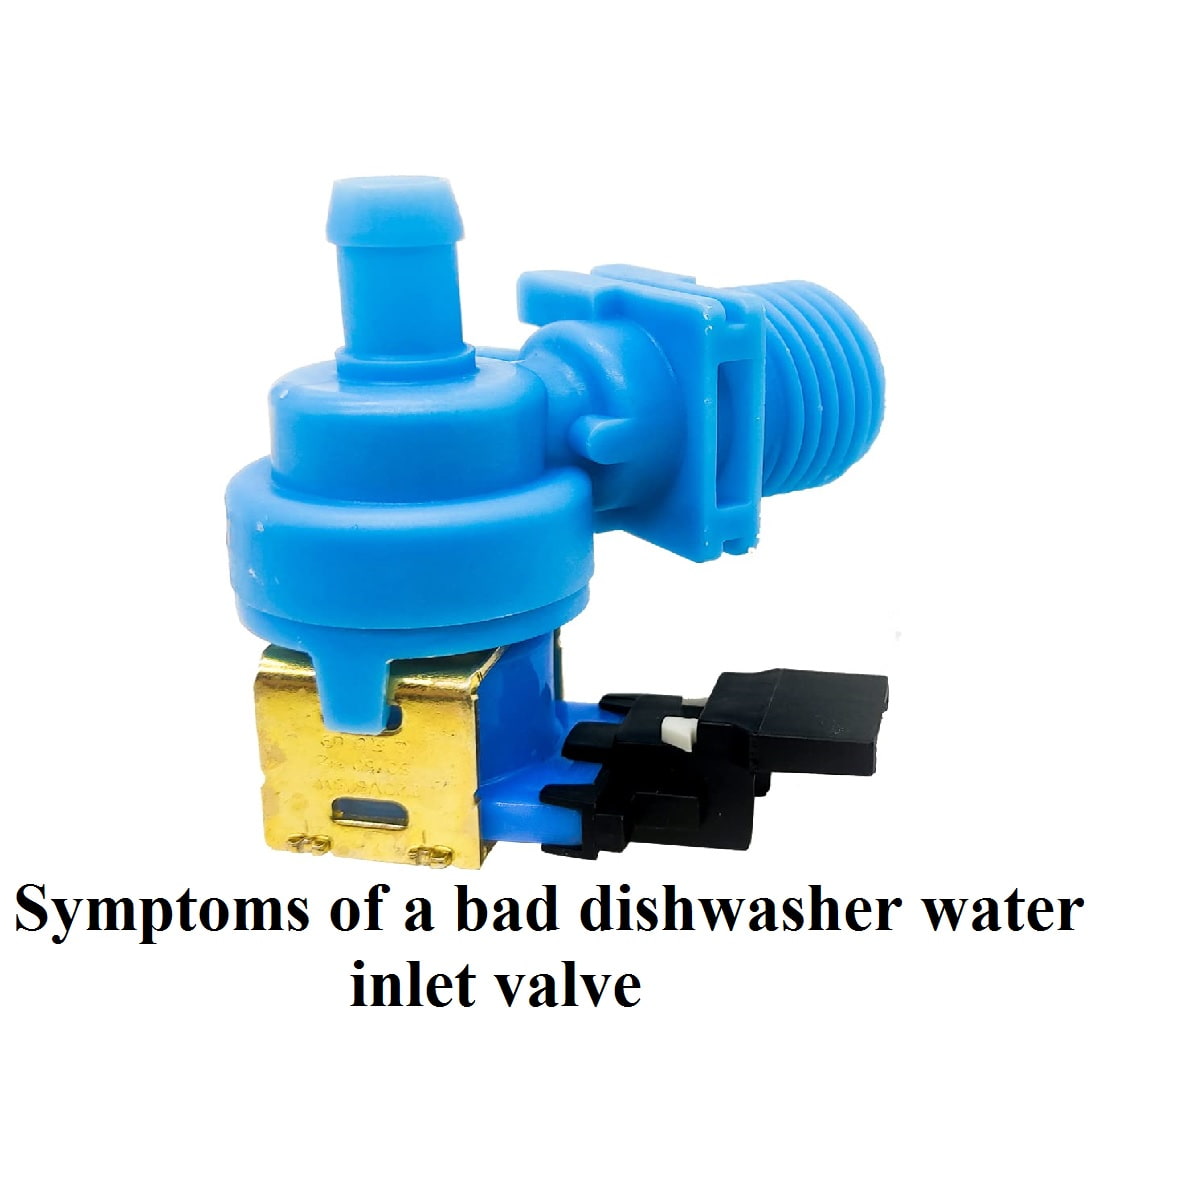 Symptoms of a bad dishwasher water inlet valve